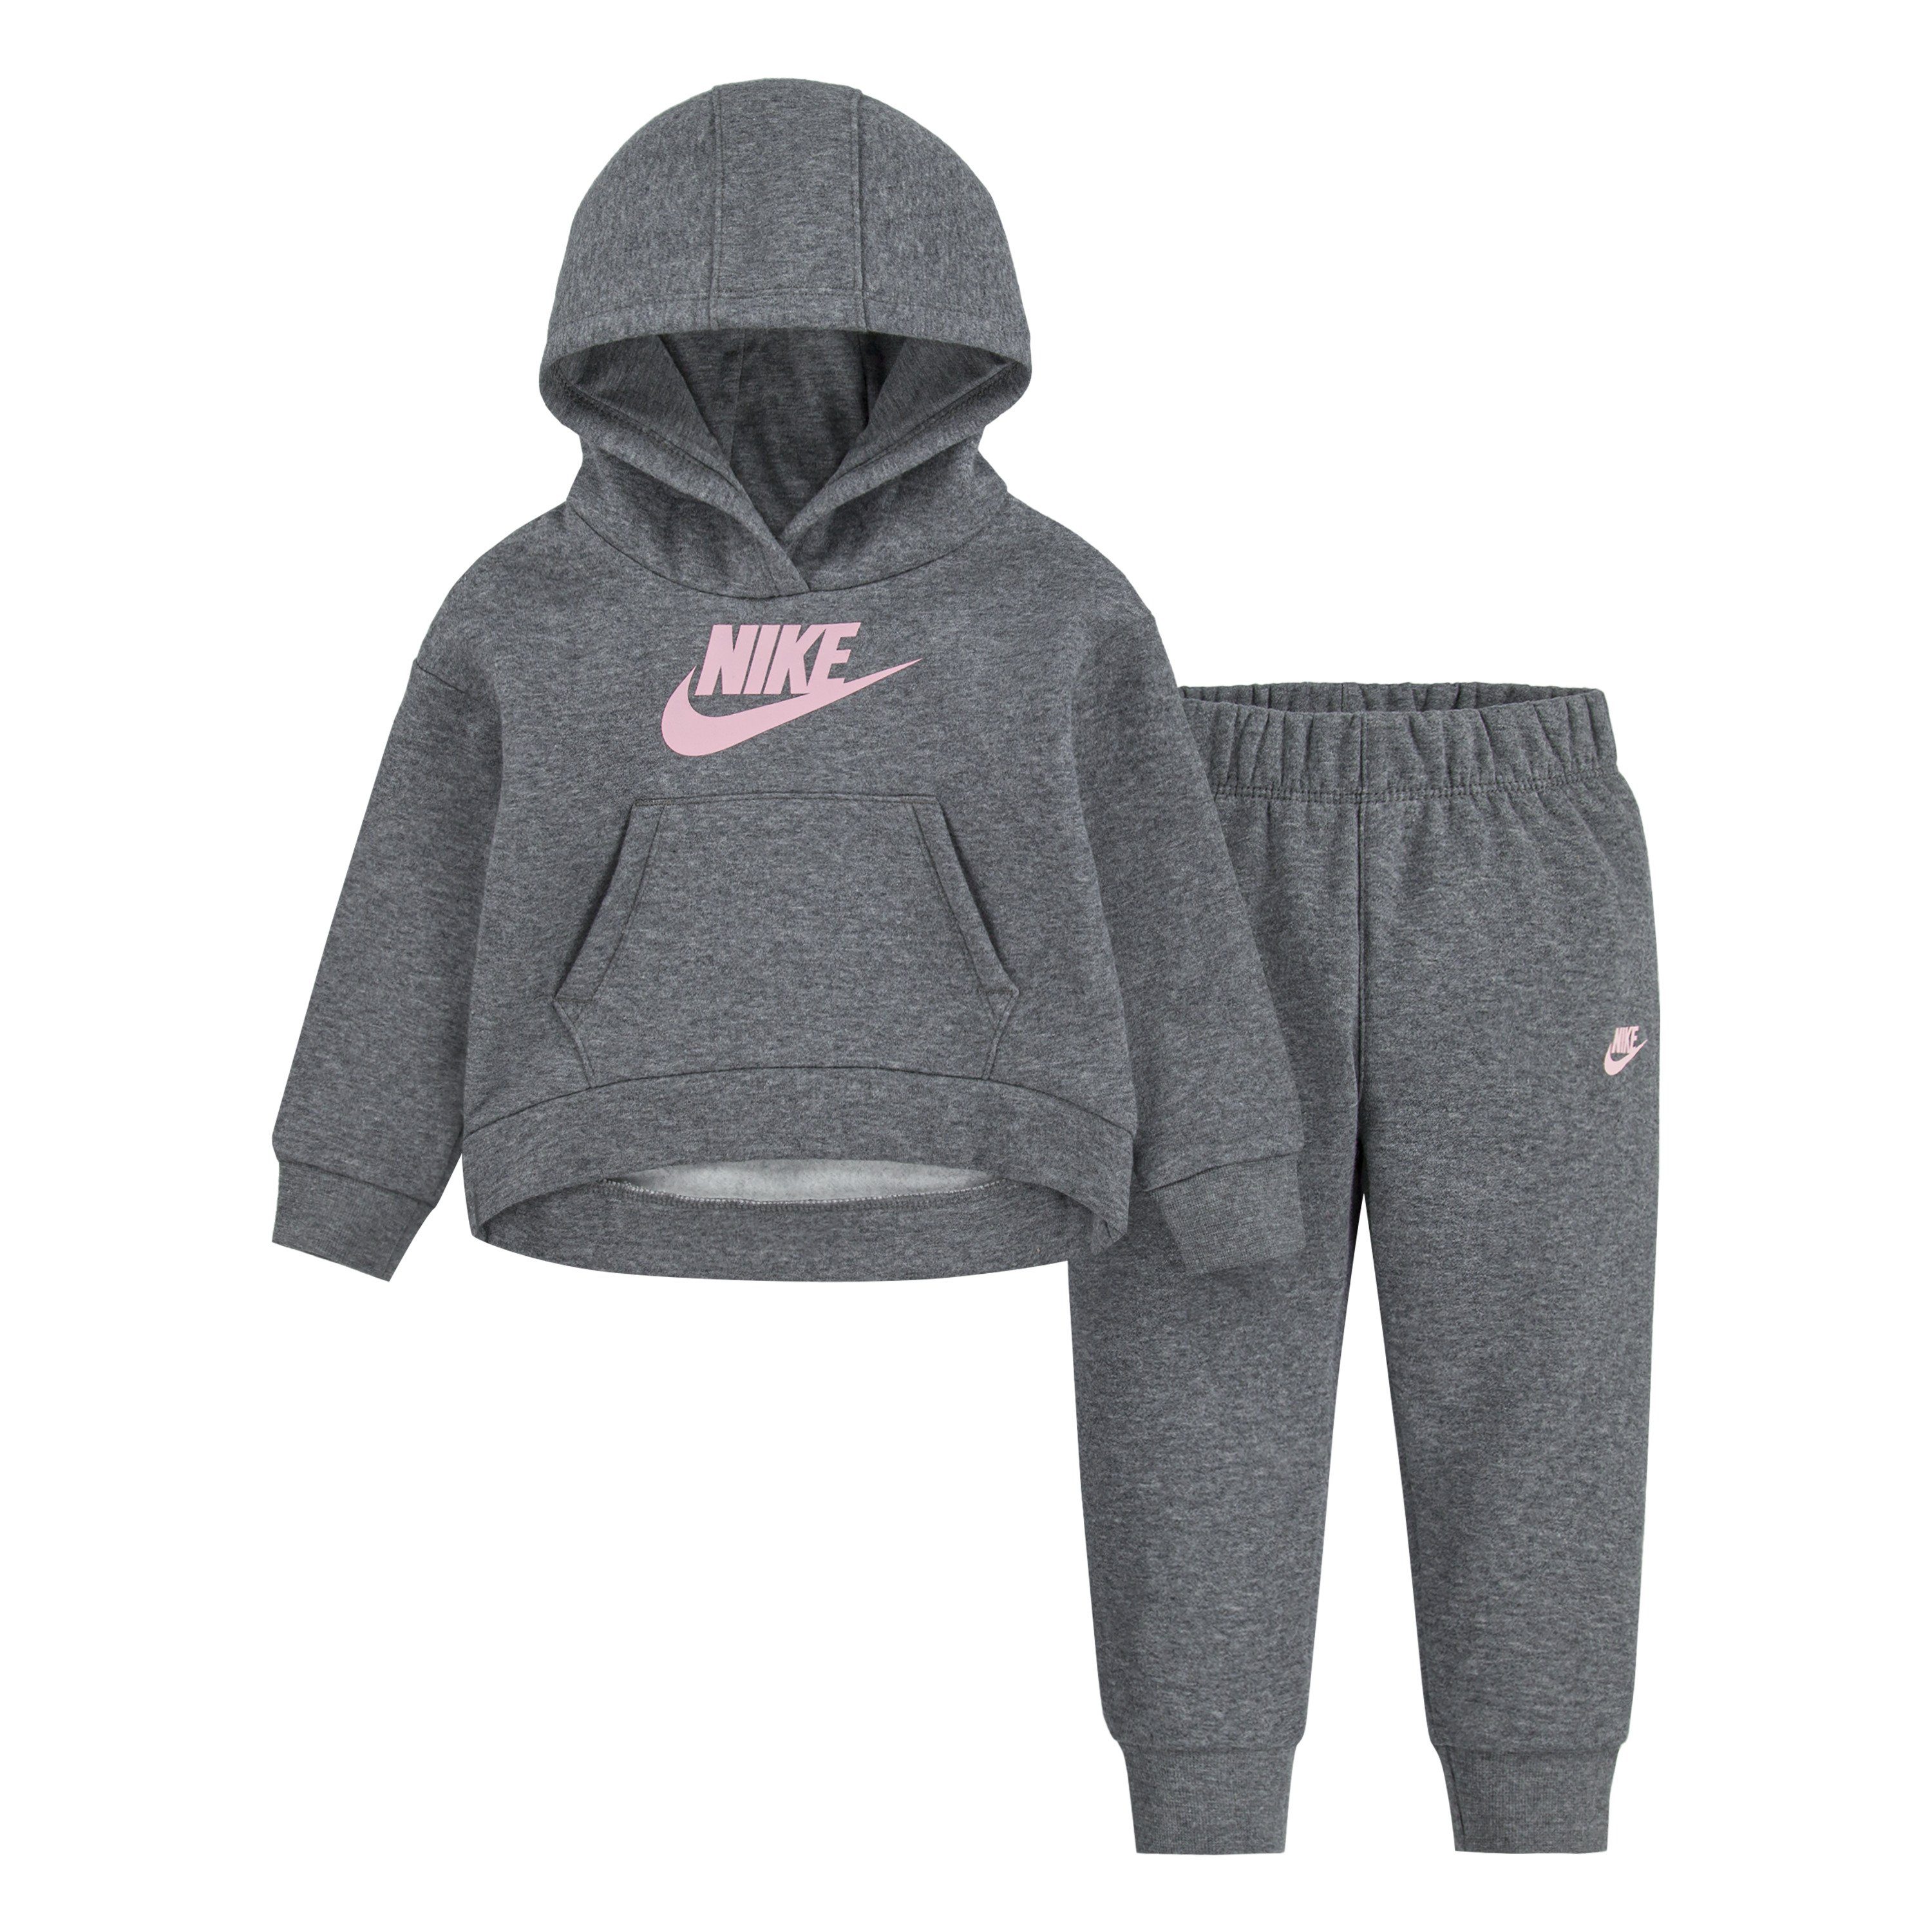 Beliebte Designs Nike Sportswear Jogginganzug grau-meliert CLUB SET FLEECE